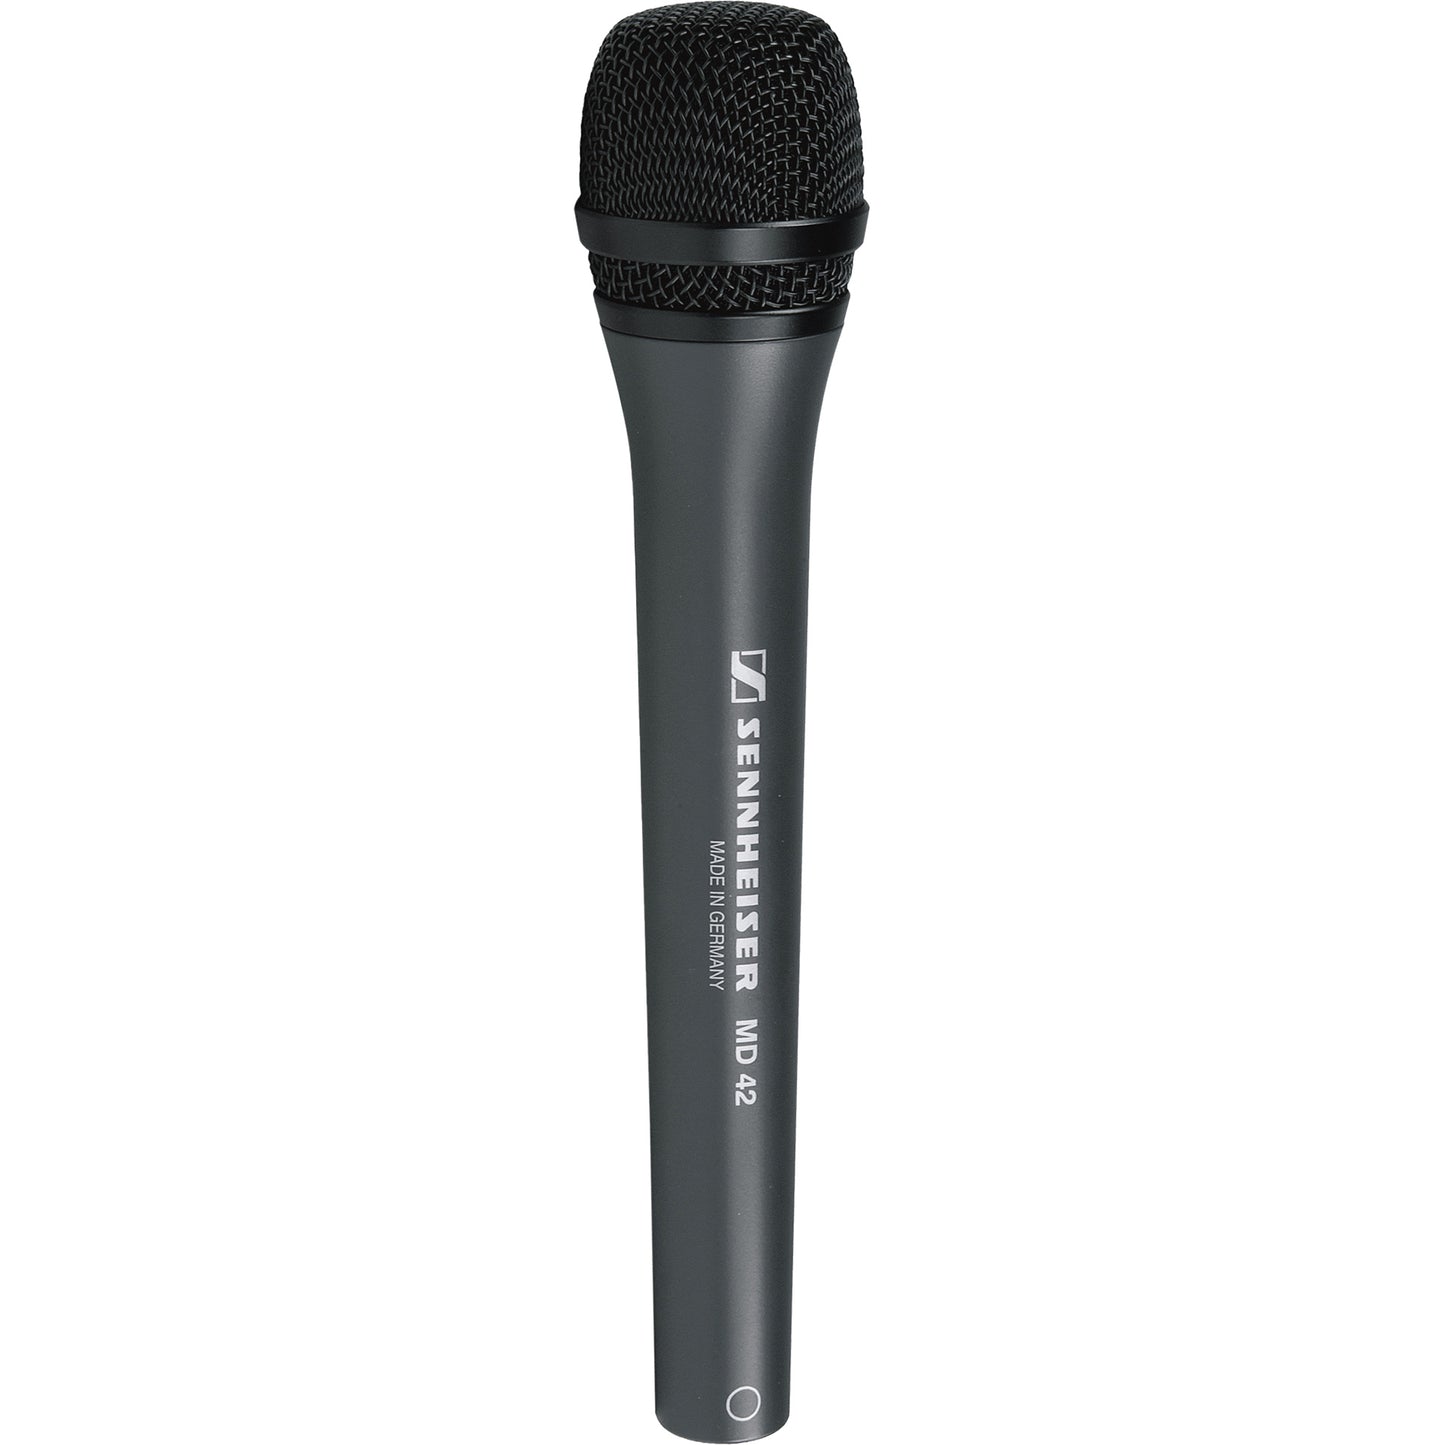  Sennheiser MD 46 cardioid interview microphone,Black : Musical  Instruments